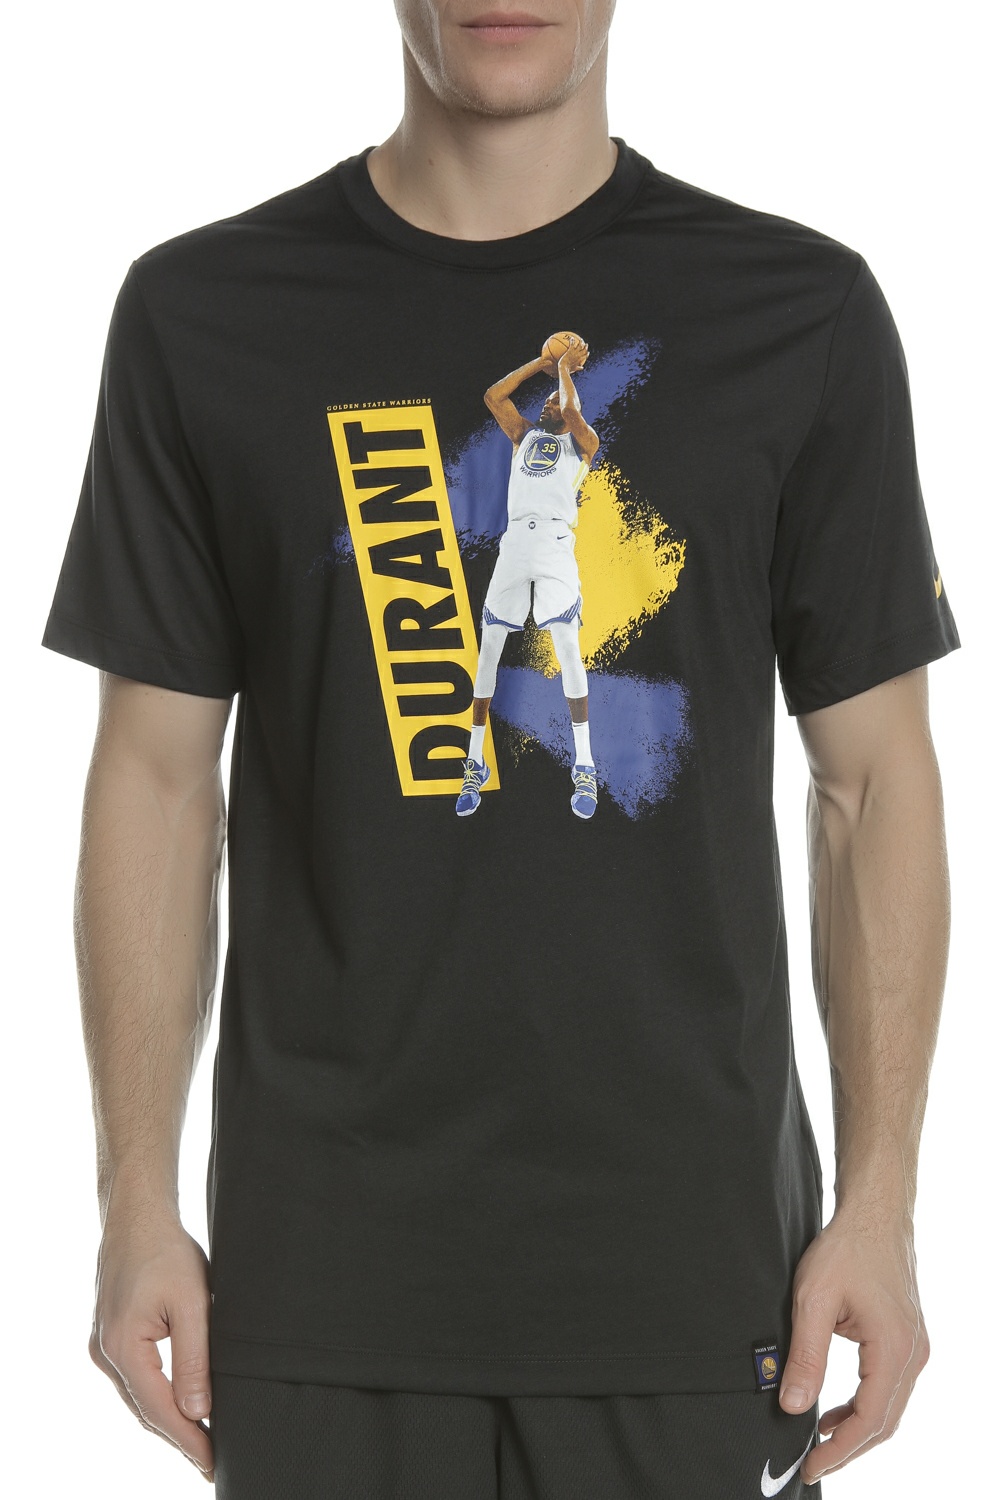 NIKE - Ανδρική κοντομάνικη μπλούζα Nike NBA Golden State Warriors Dri-FIT μαύρη Ανδρικά/Ρούχα/Αθλητικά/T-shirt